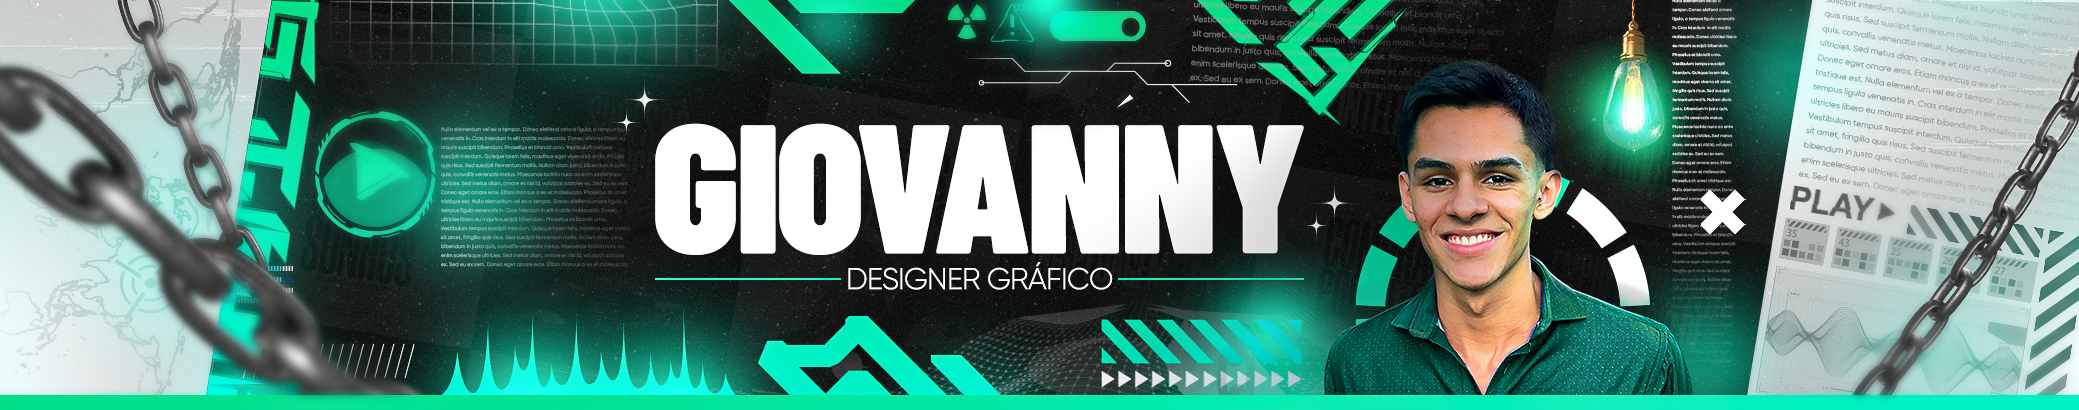 Banner de perfil de Giovanny Alves